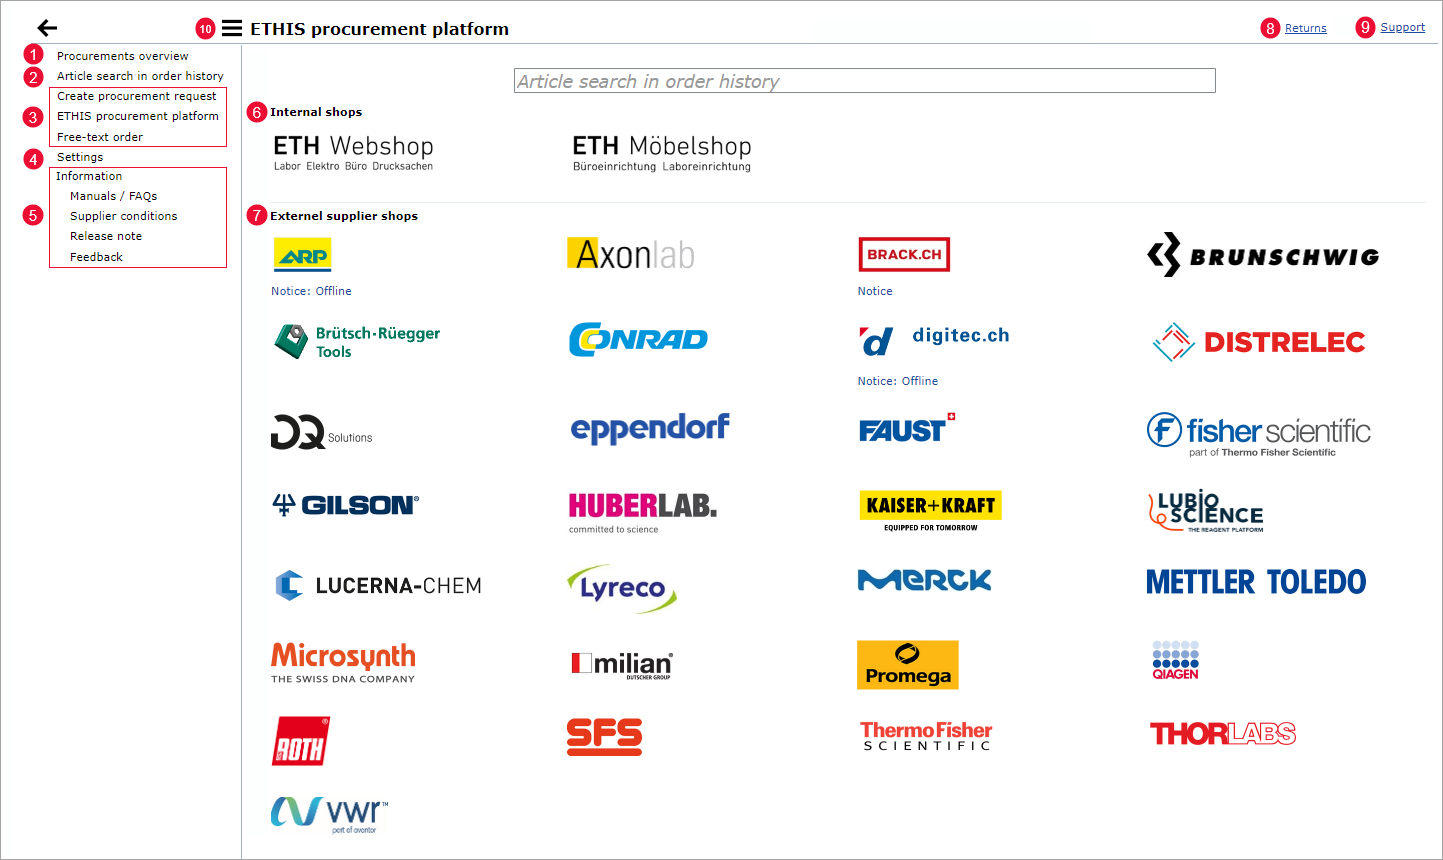 Enlarged view: Overview ETHIS procurement platform